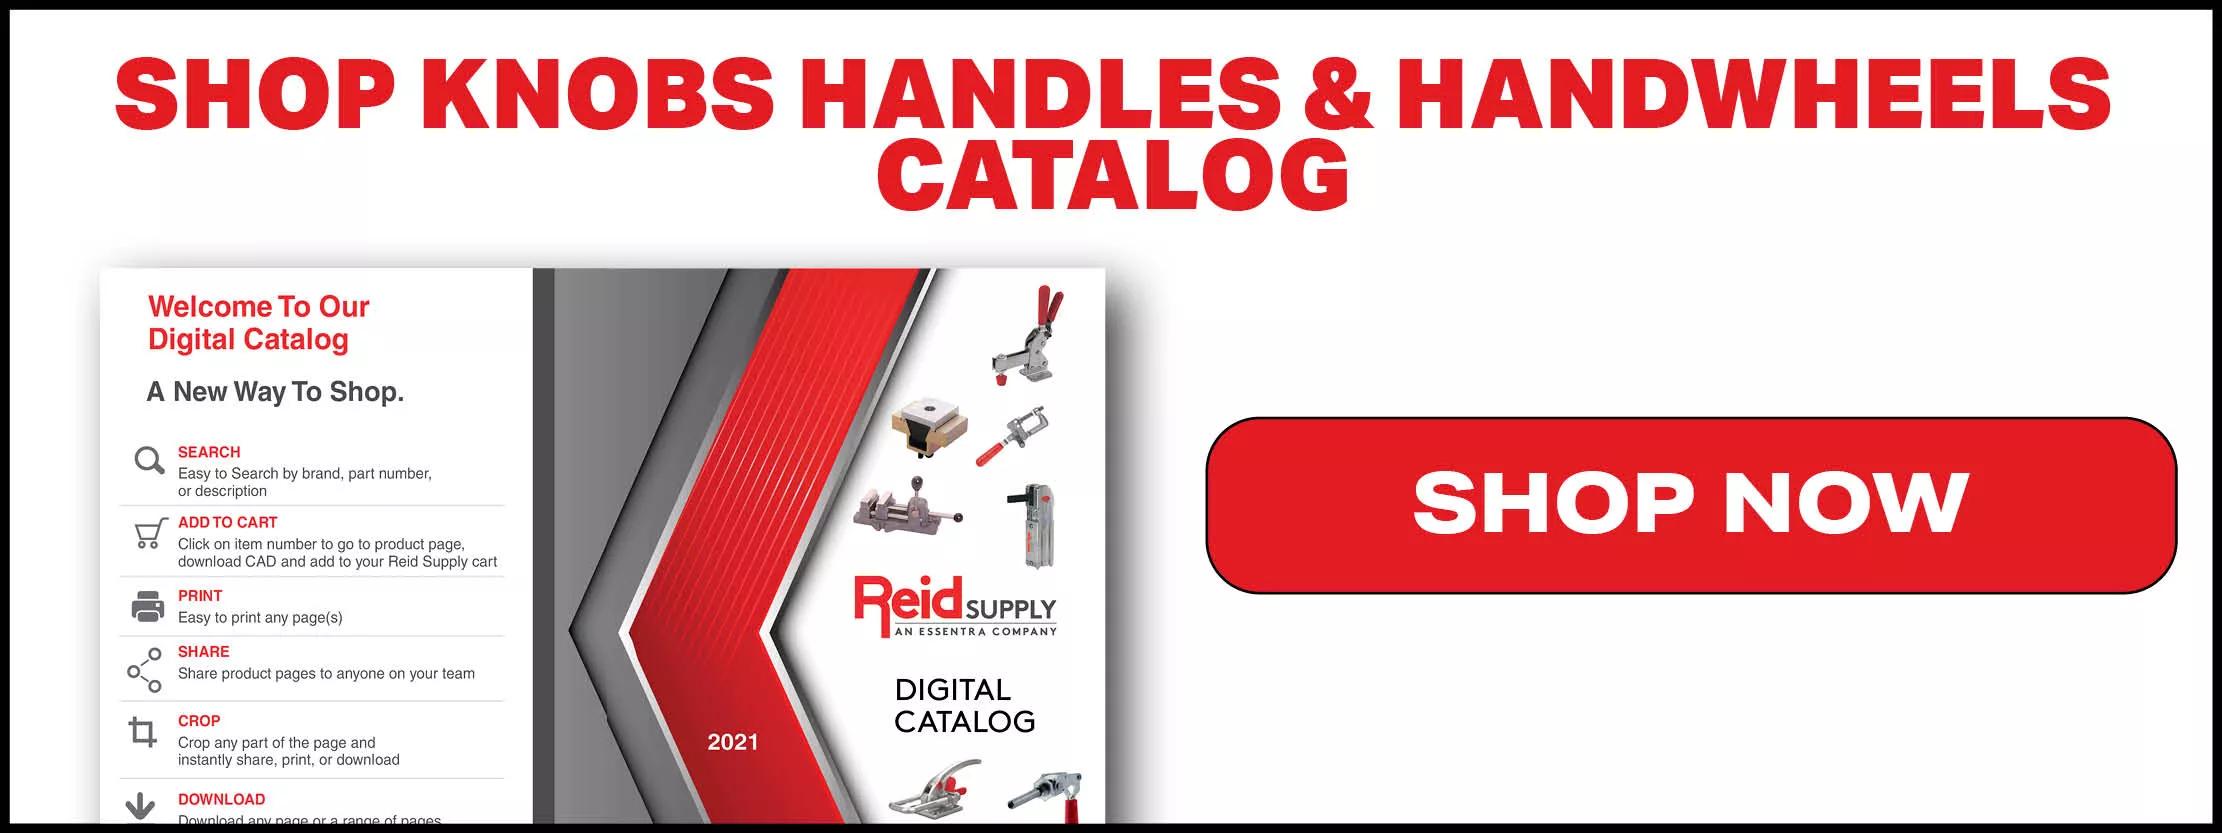 Shop Knobs Handles & Handwheels Catalog